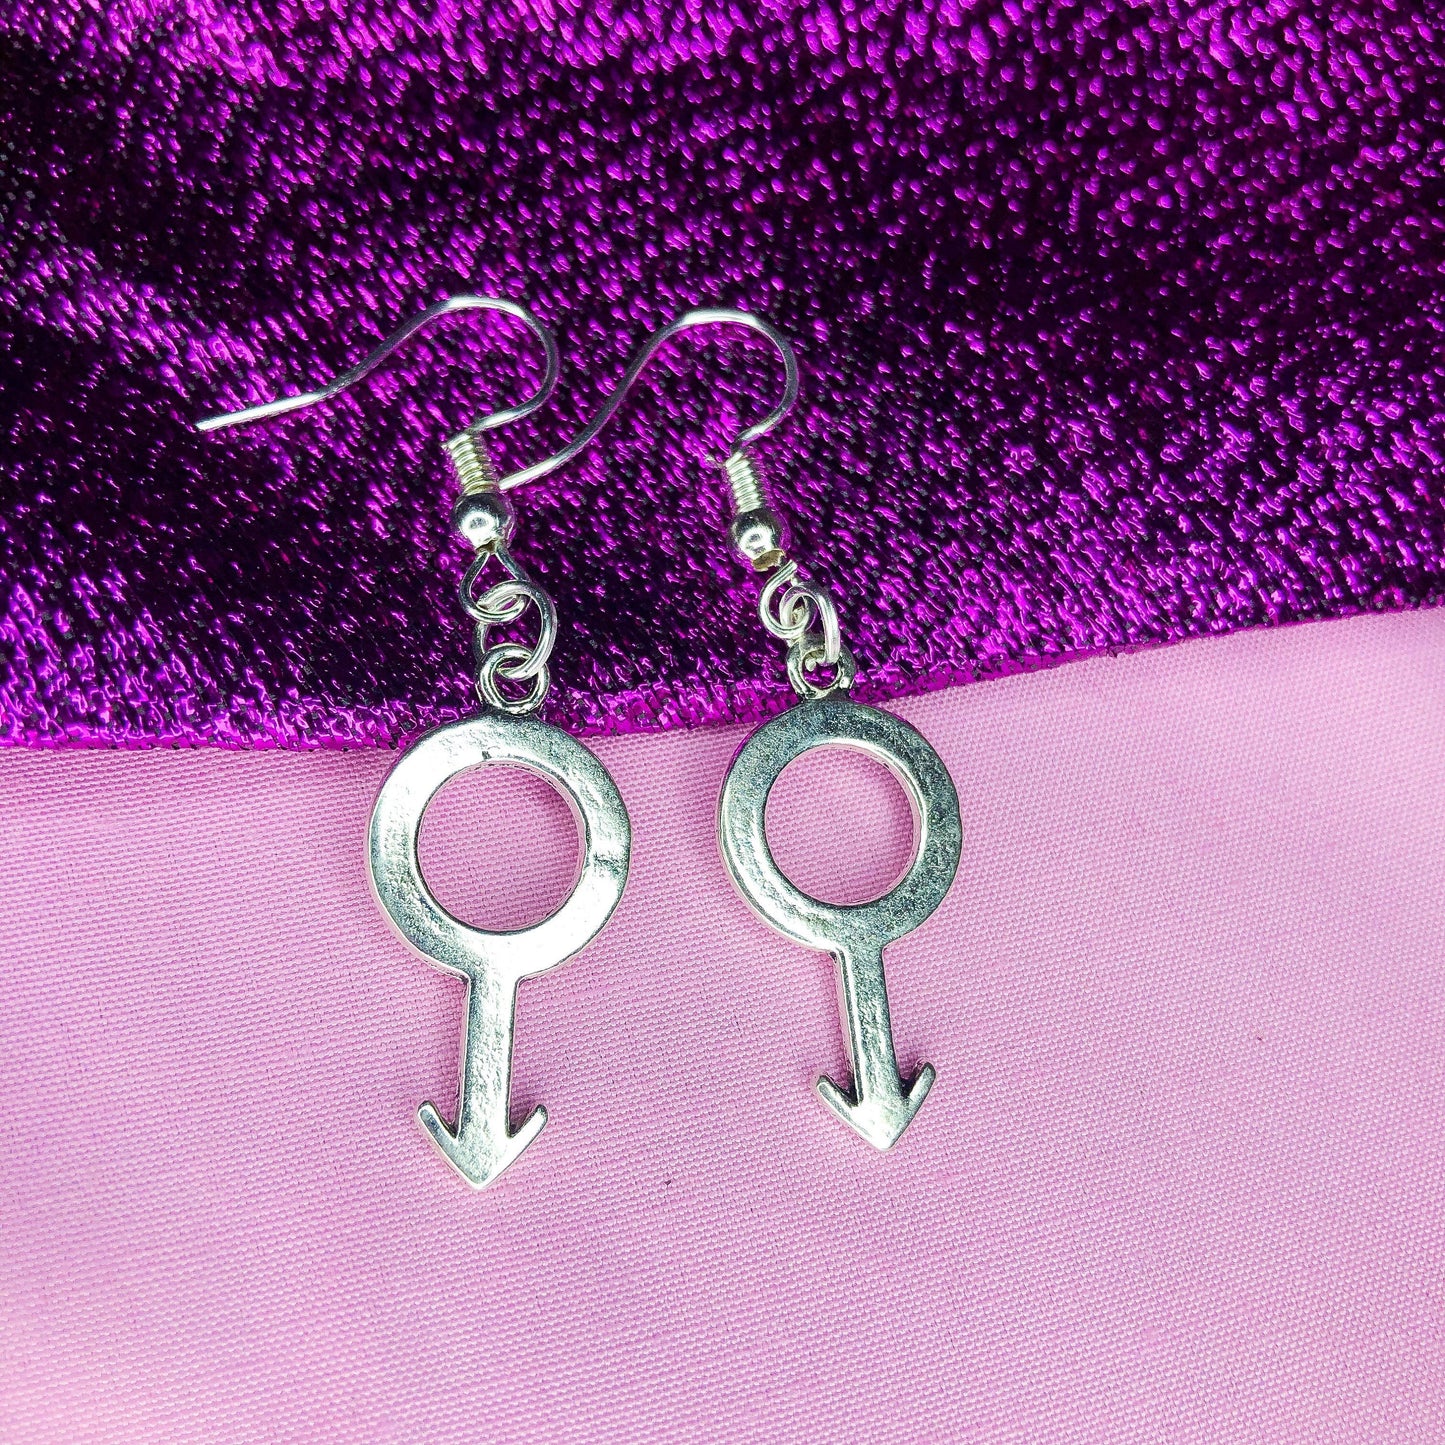 Silver Mars symbol charm earrings